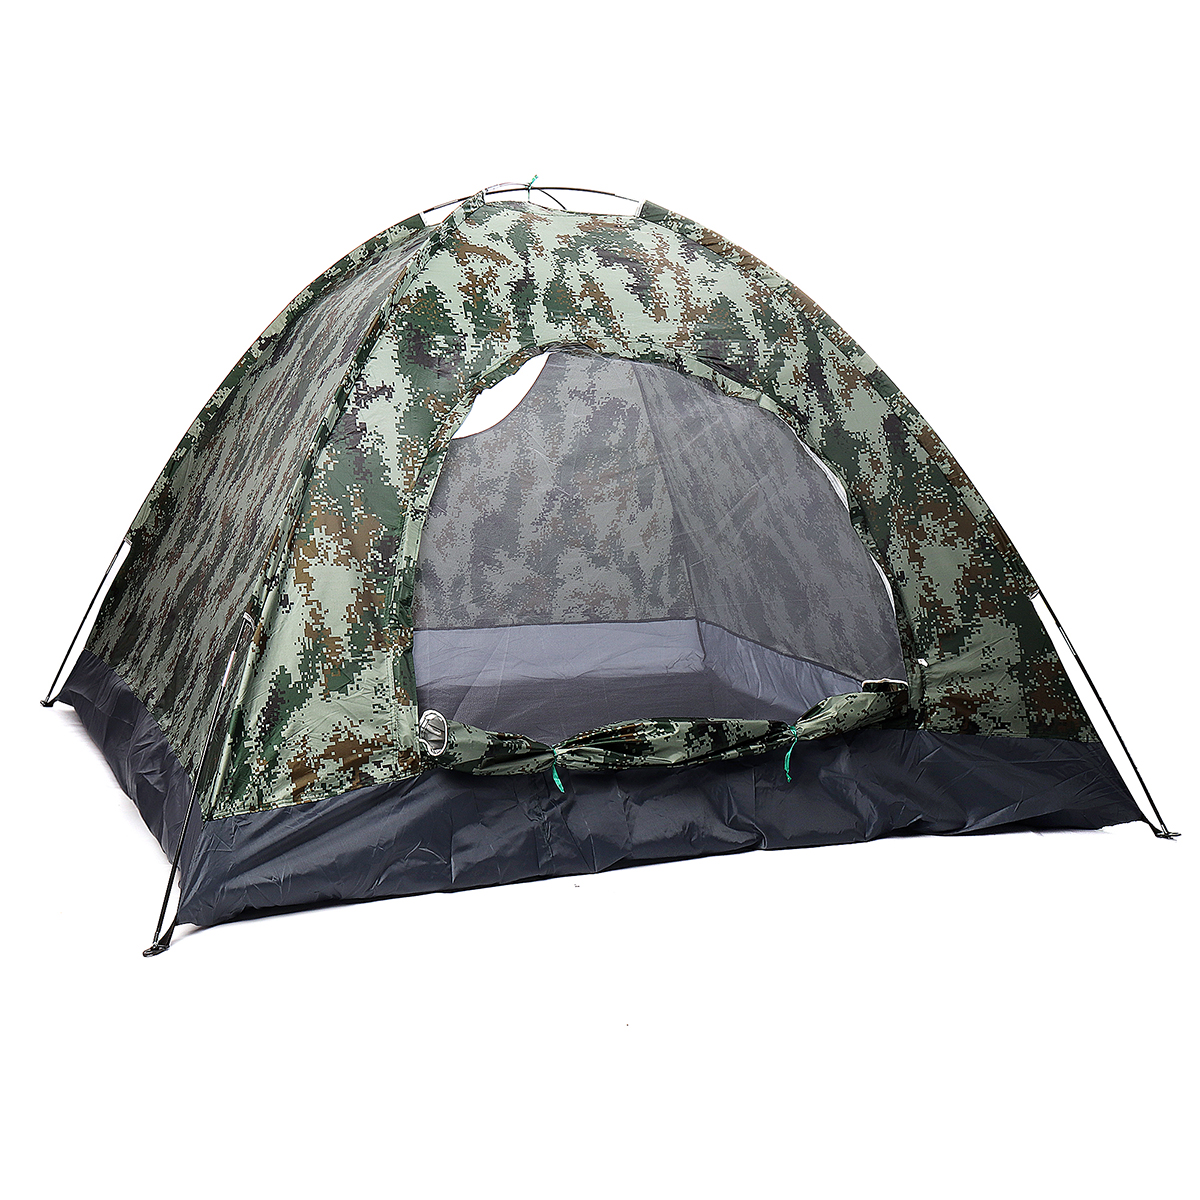 Waterproof 2 Person Man Tent Folding Camping Hiking Outdoor Beach Camo Tent UK